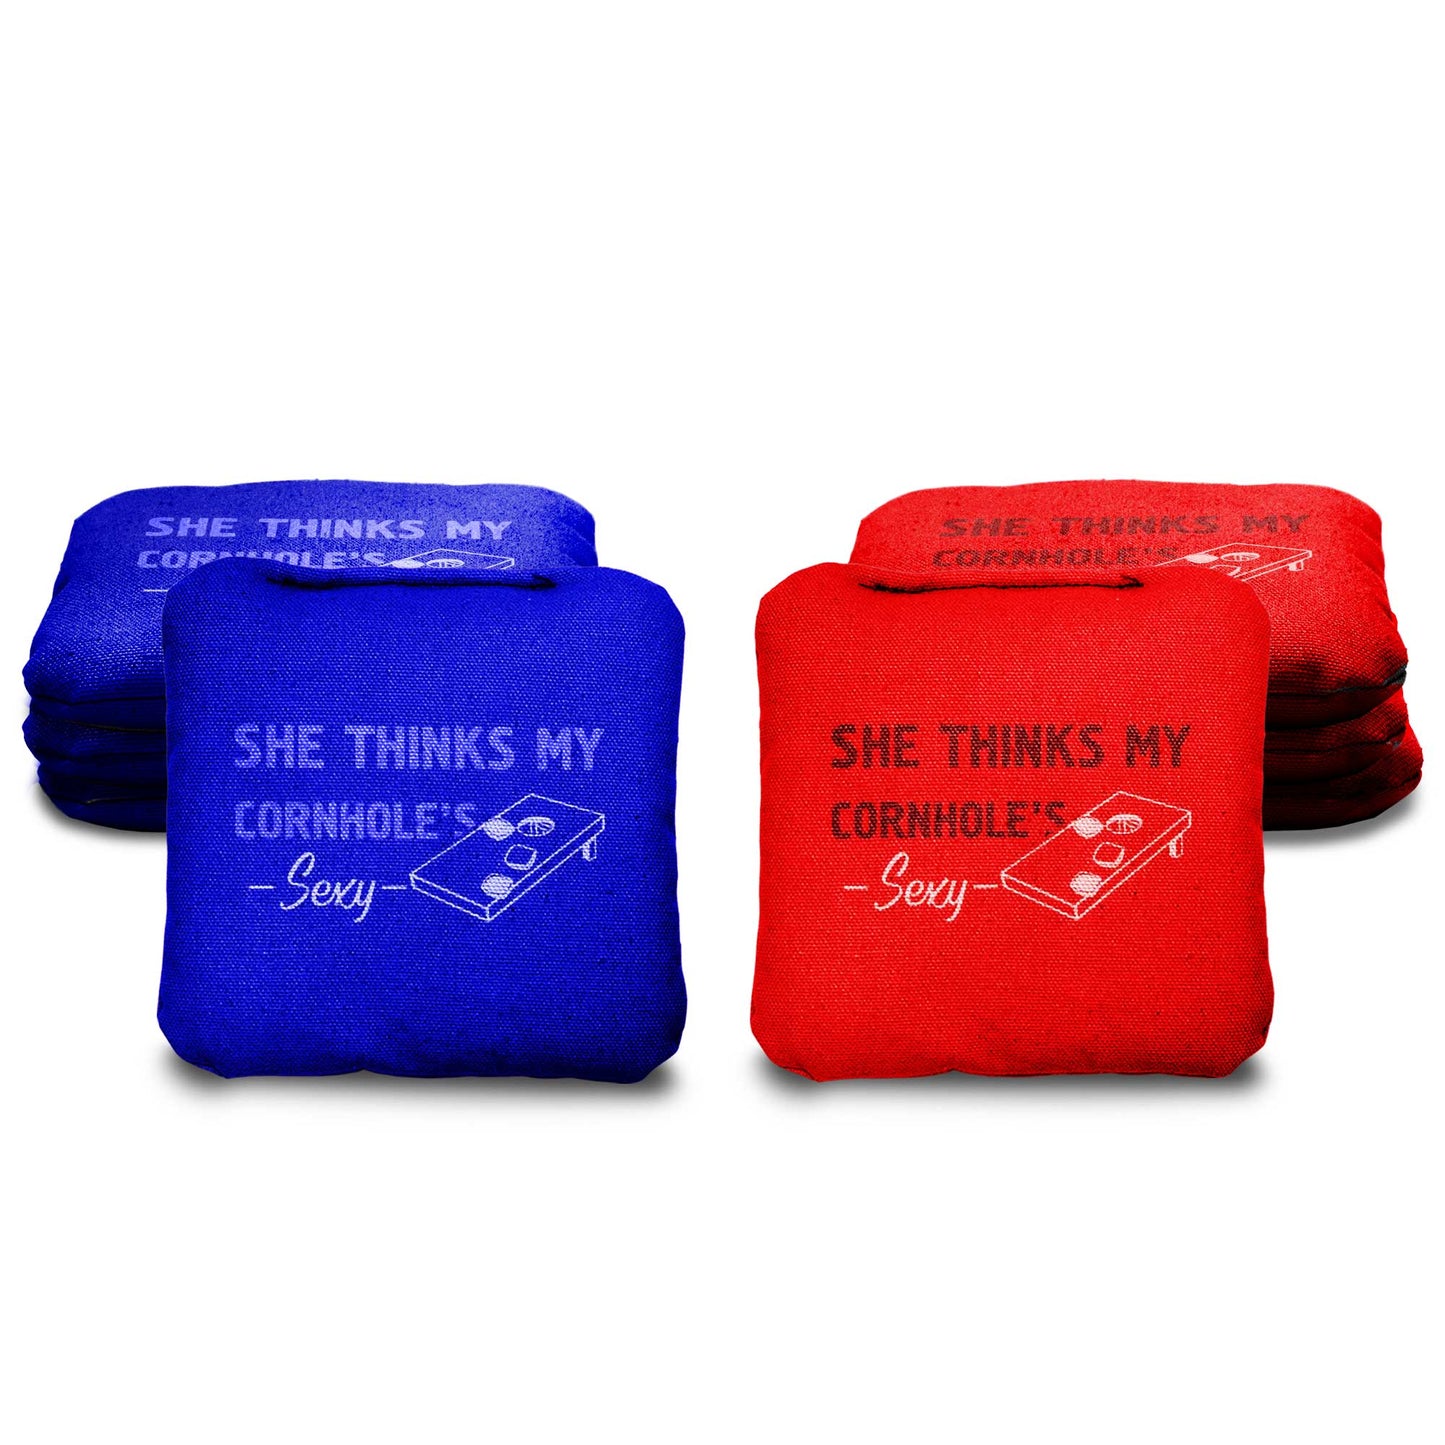 The Sexys - 8 Cornhole Bags